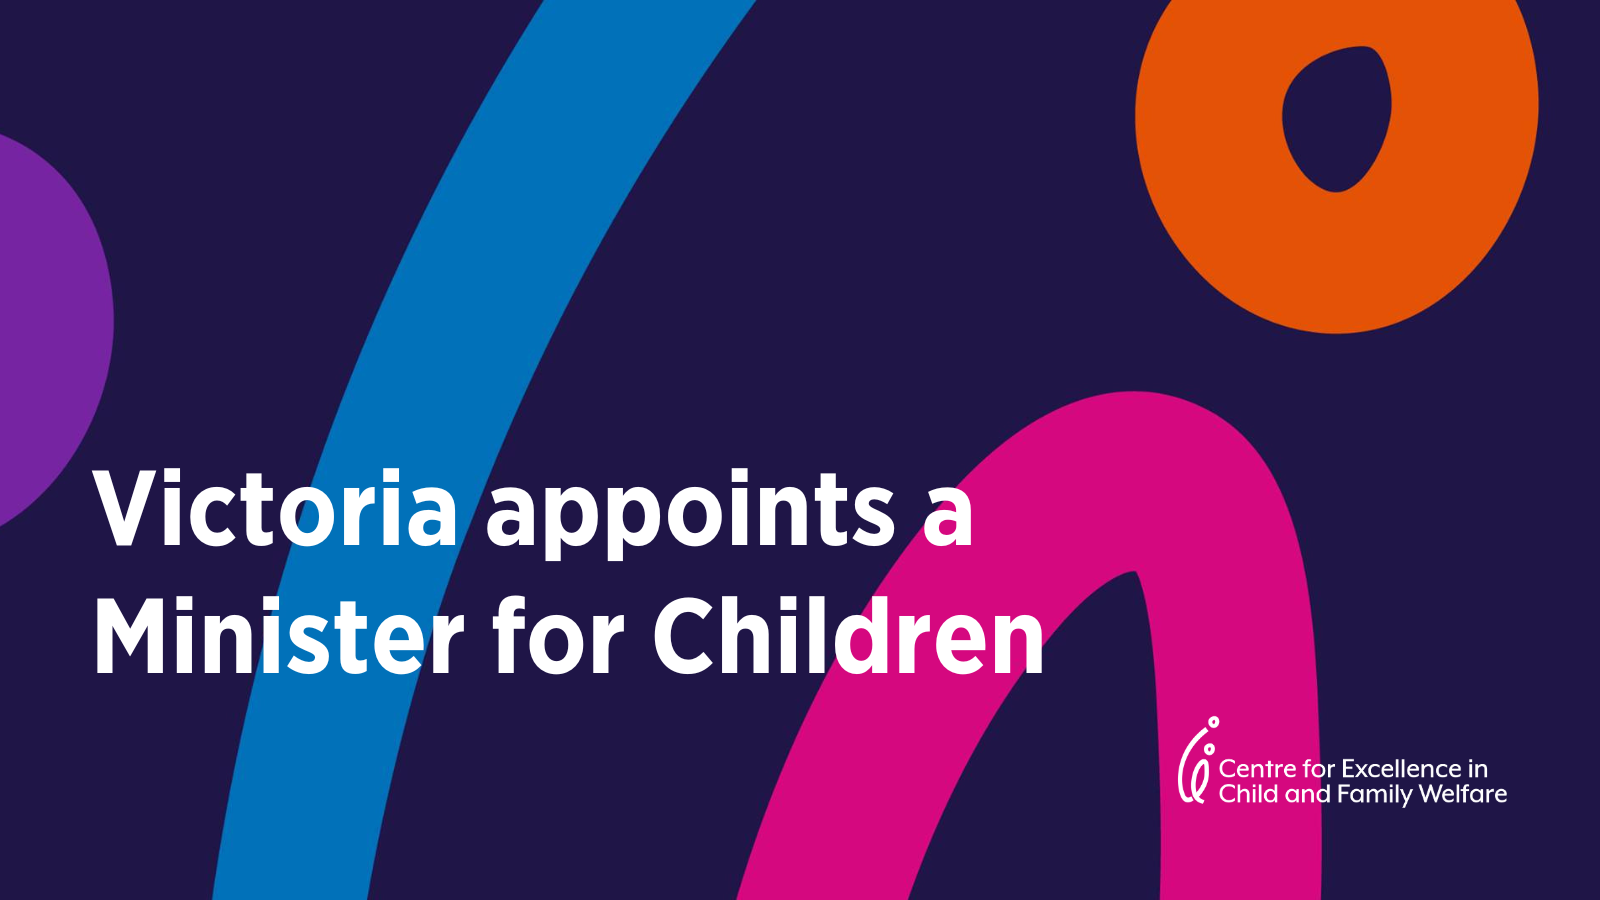 Jacinta Allan appoints Minister for Children for Victoria